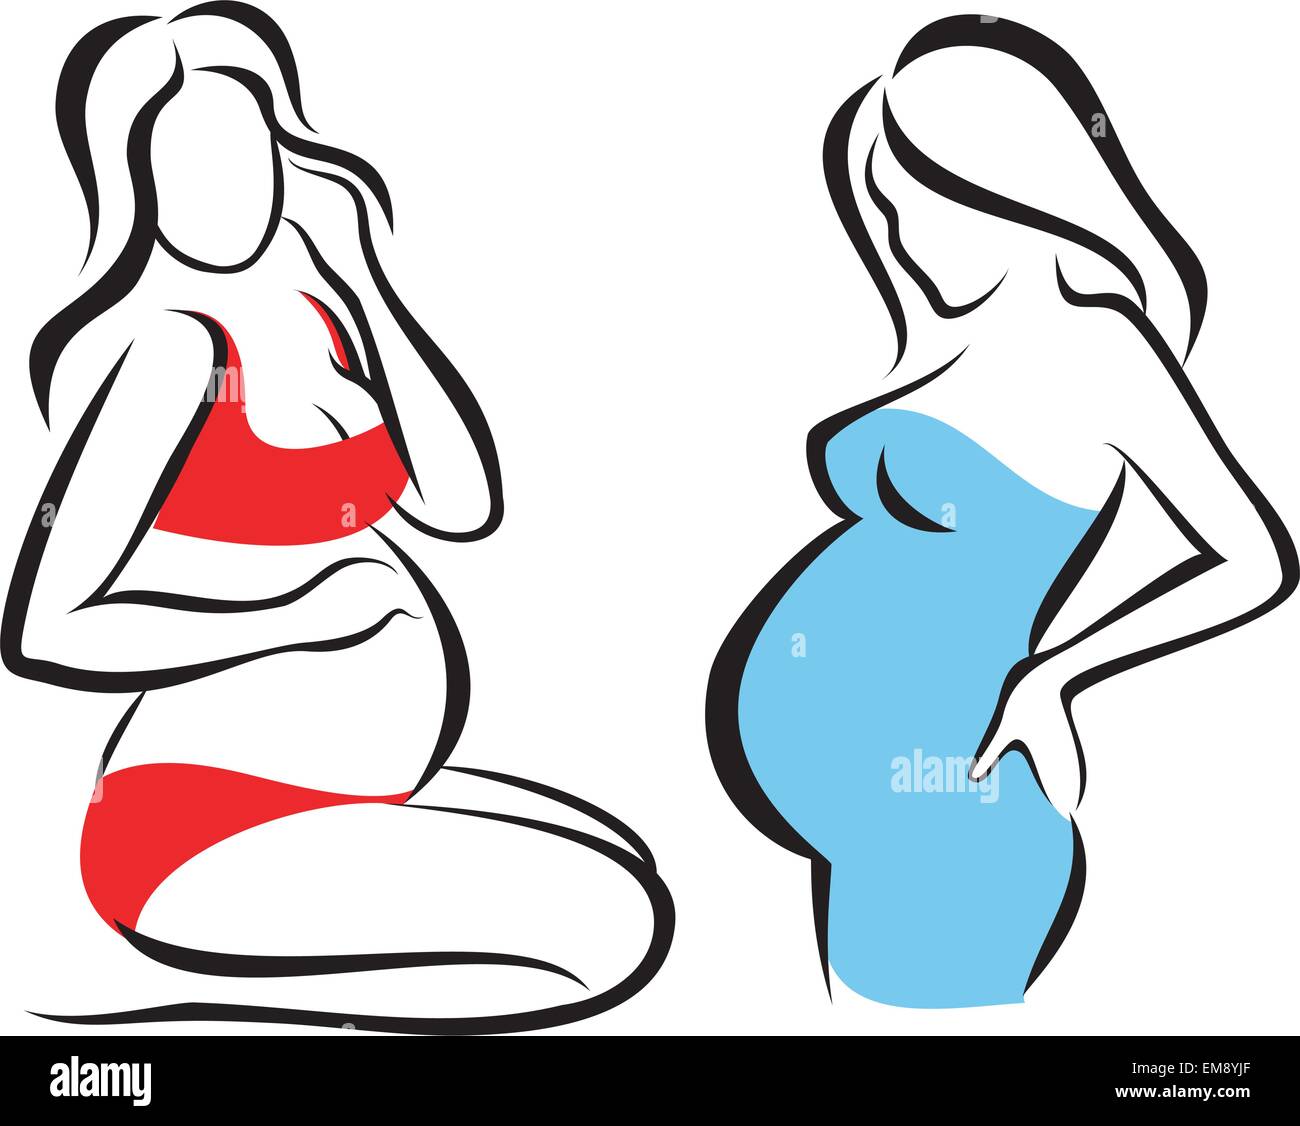 pregnant woman awaitng childbirth, set of vector icons Stock Vector